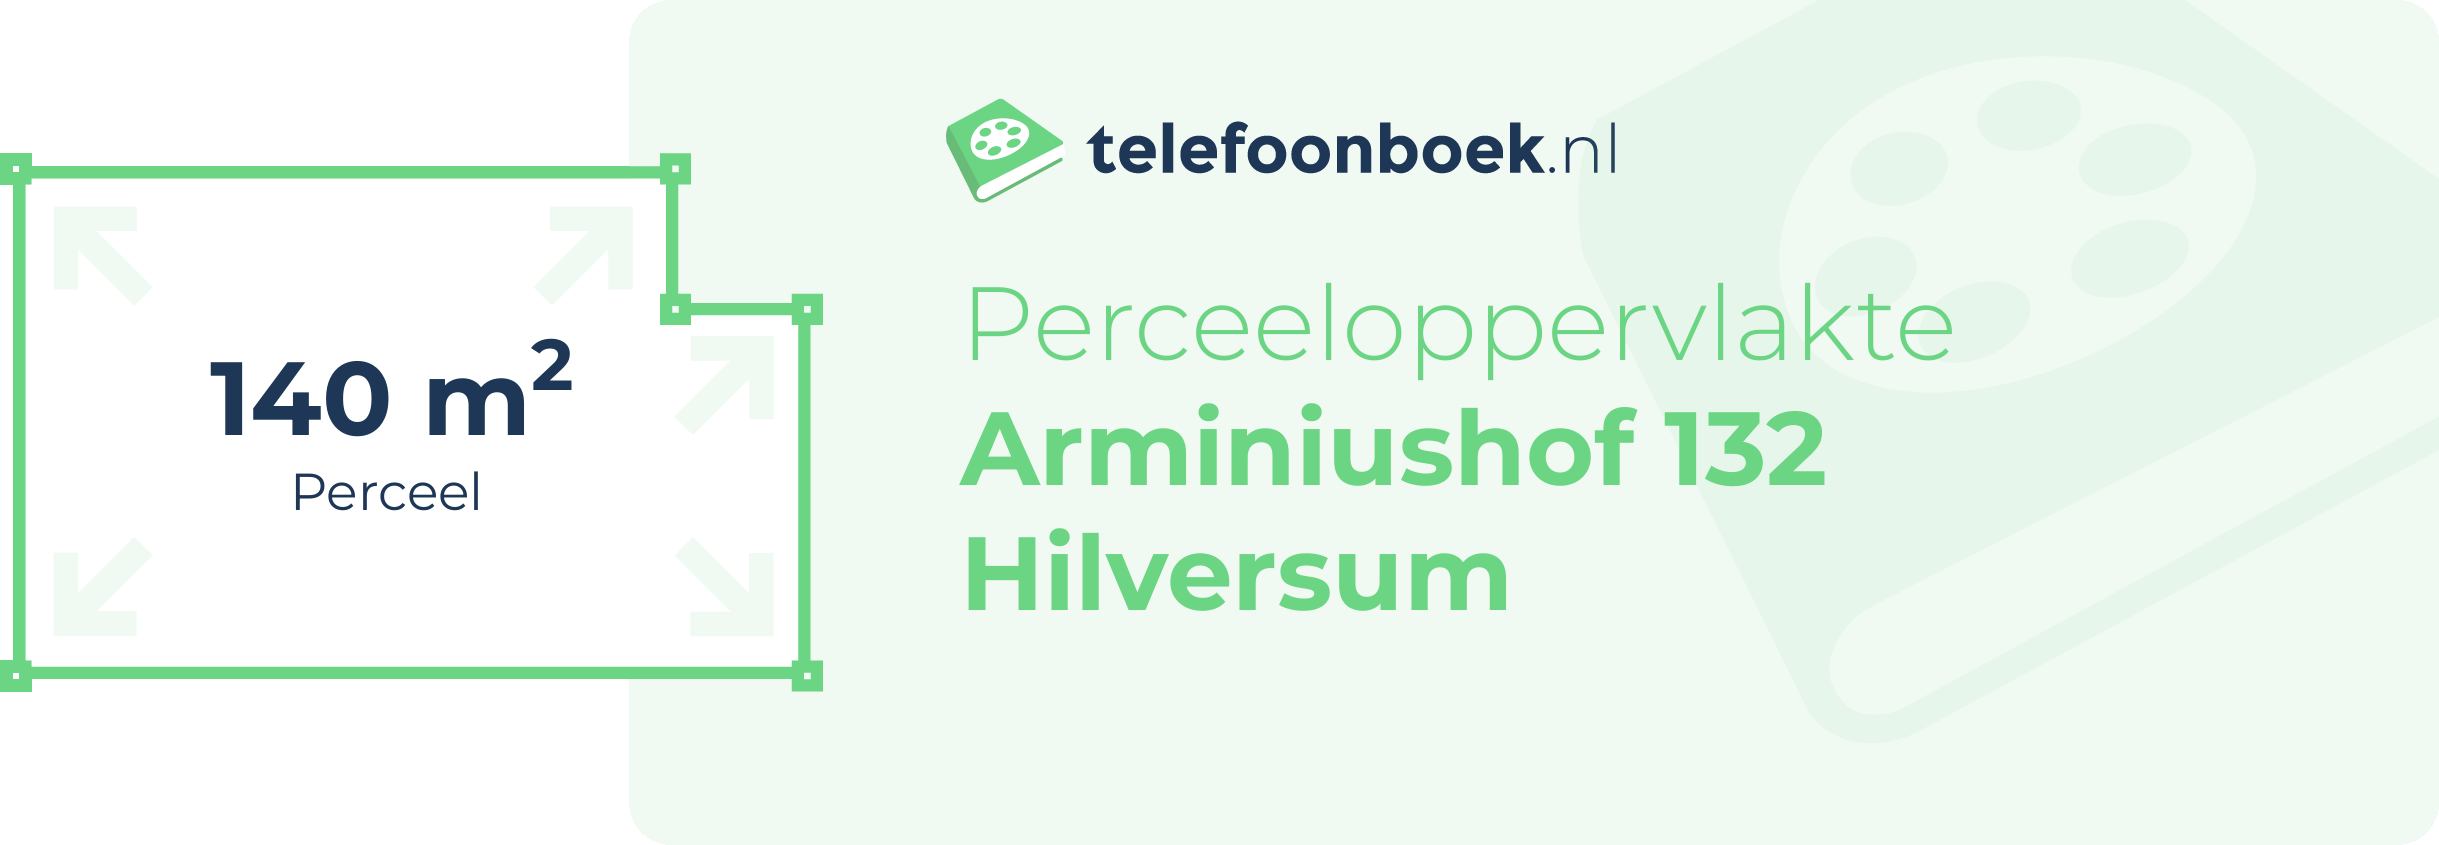 Perceeloppervlakte Arminiushof 132 Hilversum